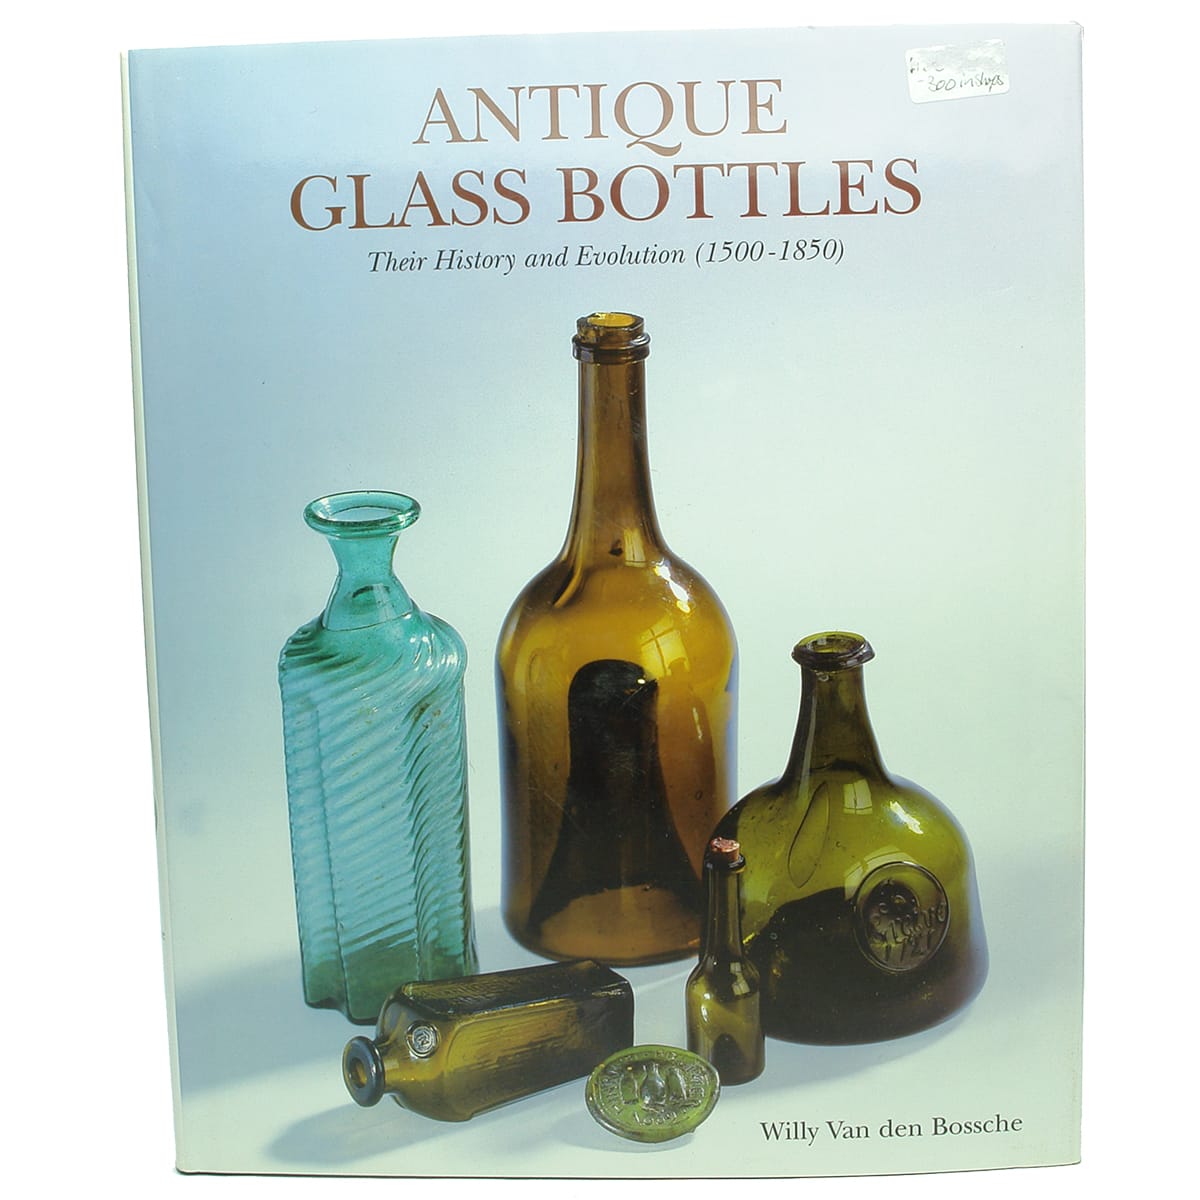 Book. Antique Glass Bottles, Their History and Evolution (1500-1850), Willy Van den Bossche, 2001.